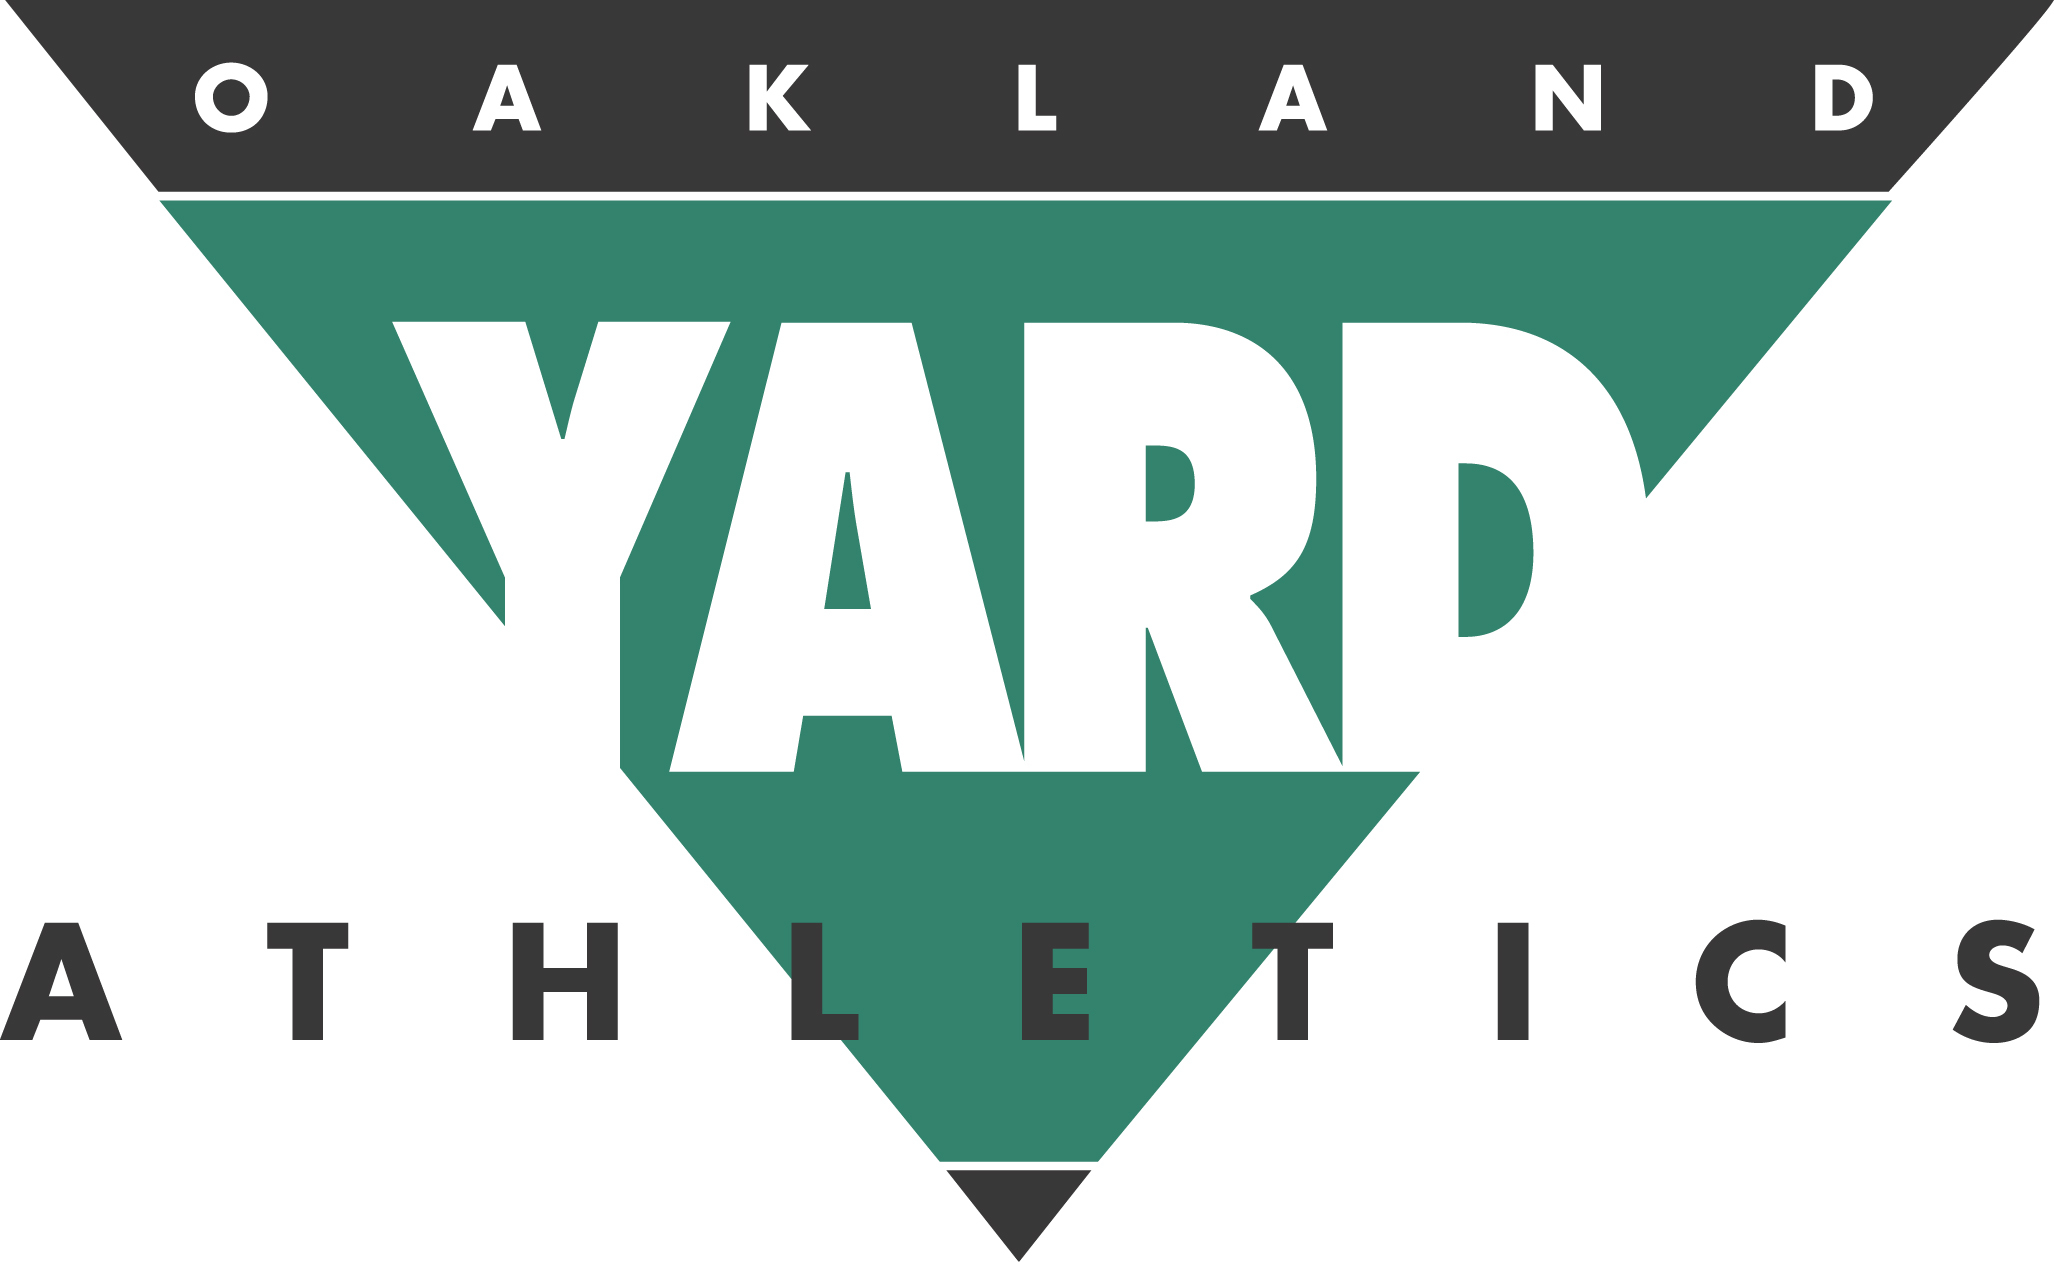 Oakland Yard Athletics Logo